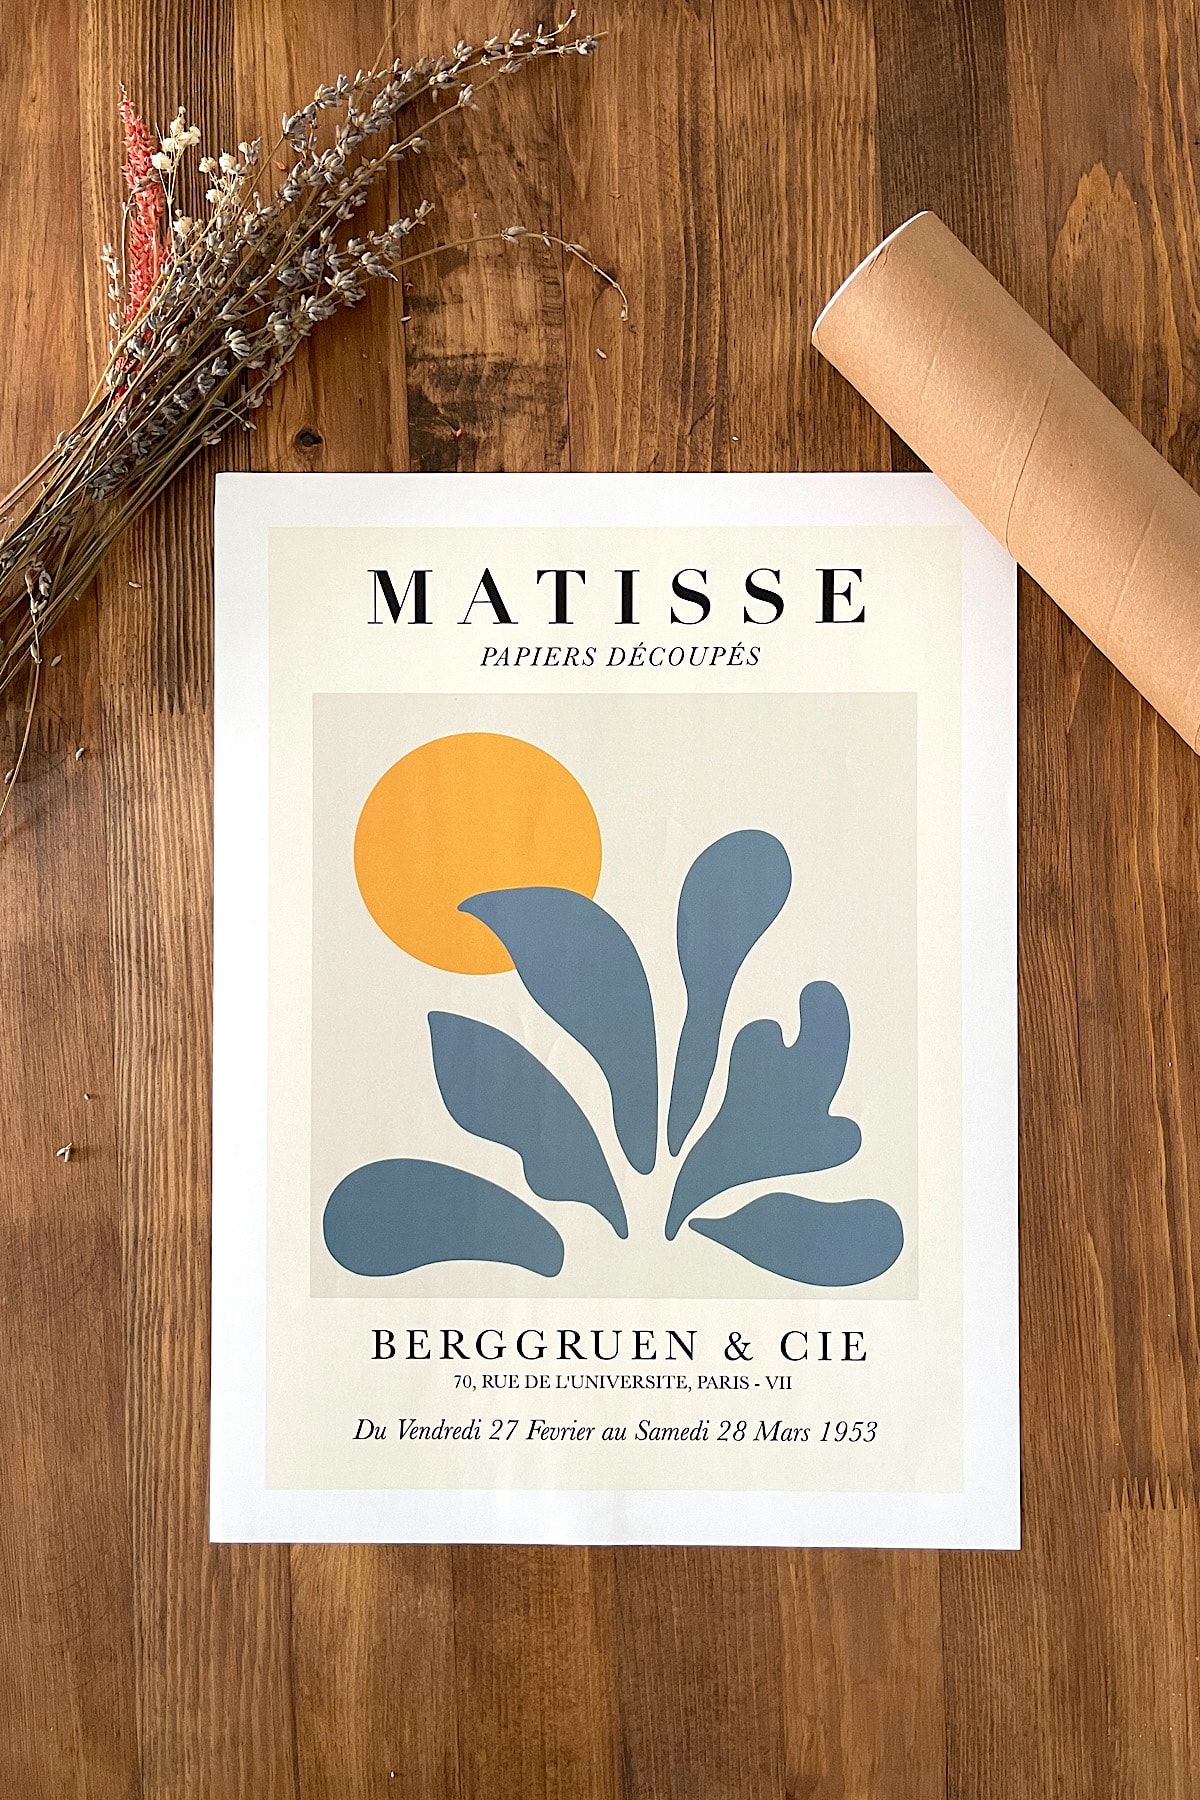 capo by aytaç yamaç Poster - Matisse Papiers Decoupes Art Vintage Reprodüksiyon 30x40cm